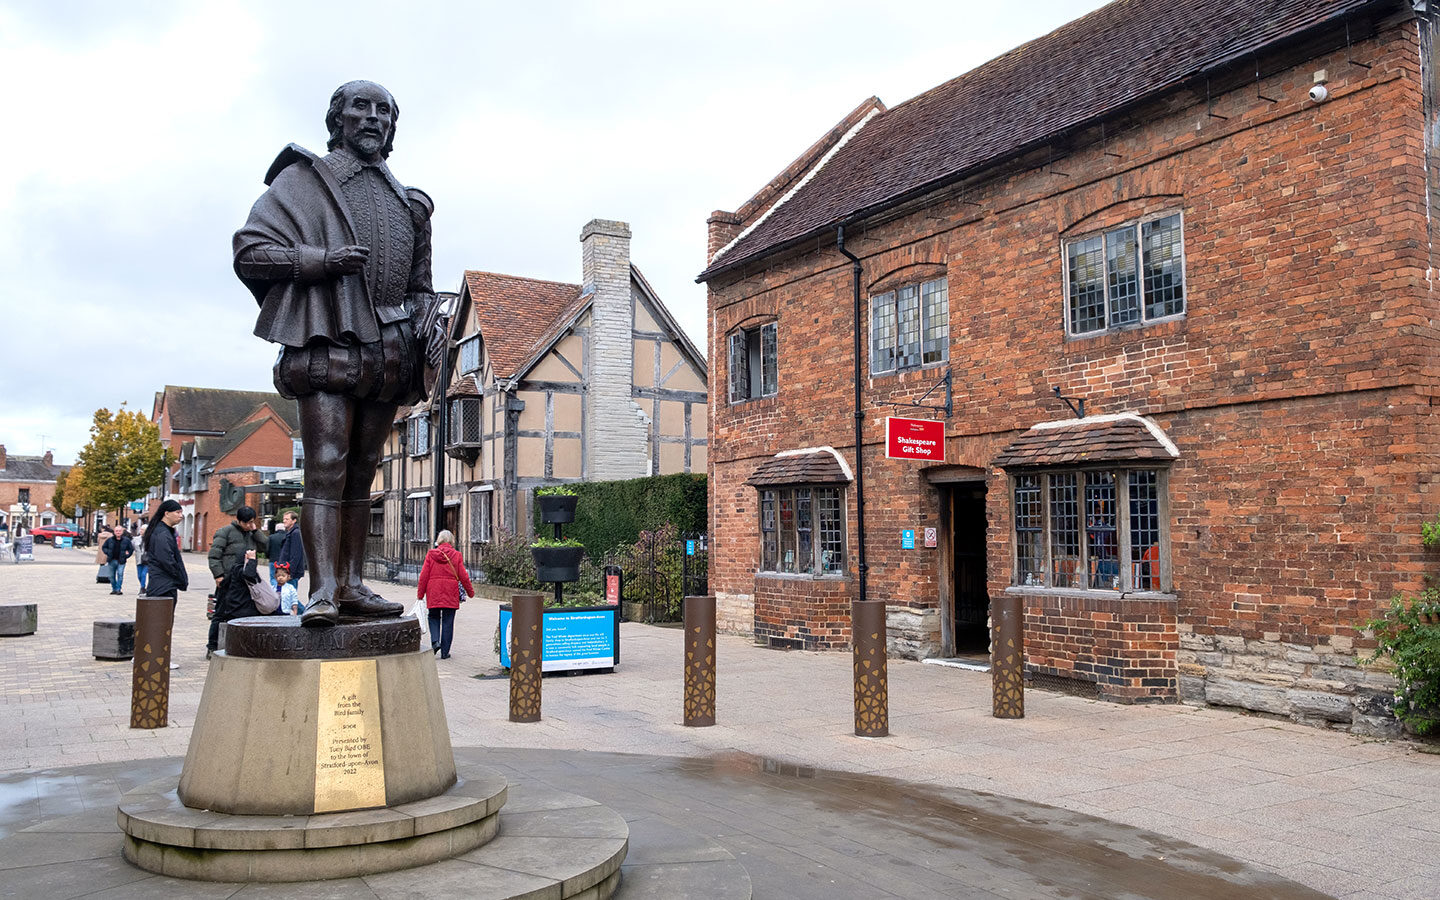 William Shakespeare statue in Stratford-upon-Avon